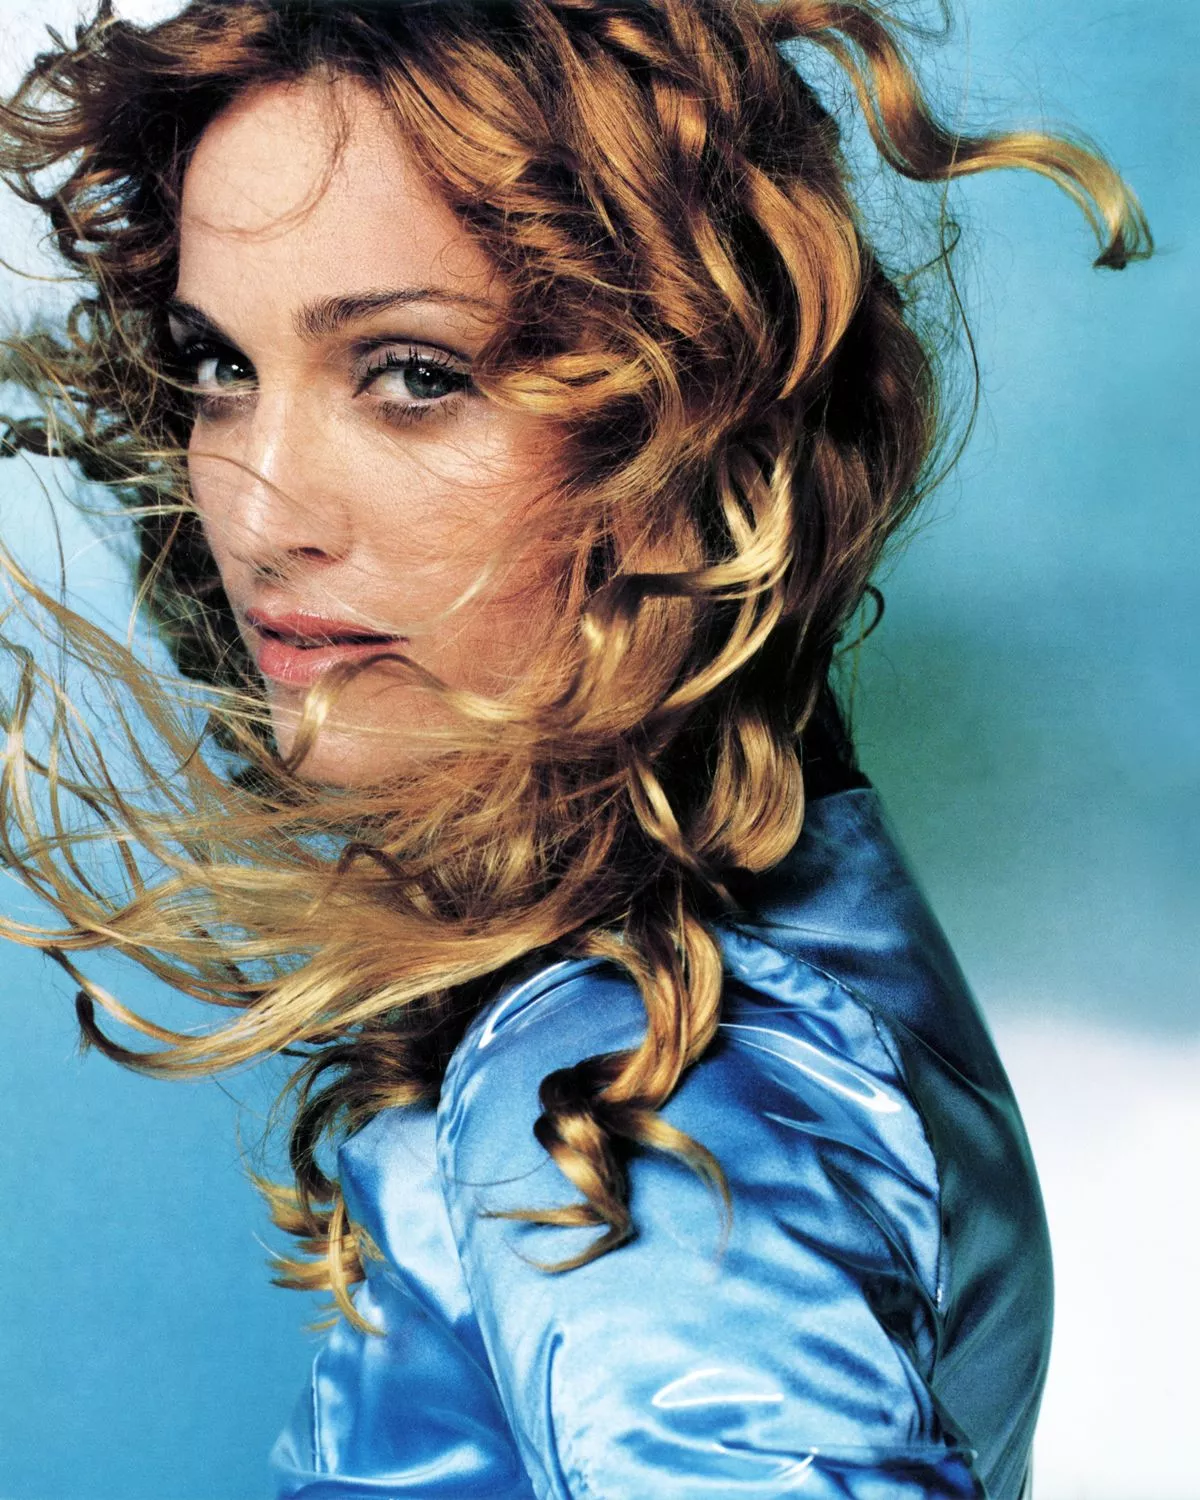 Мадонна для обложки альбома Ray of Light, фото Марио Тестино